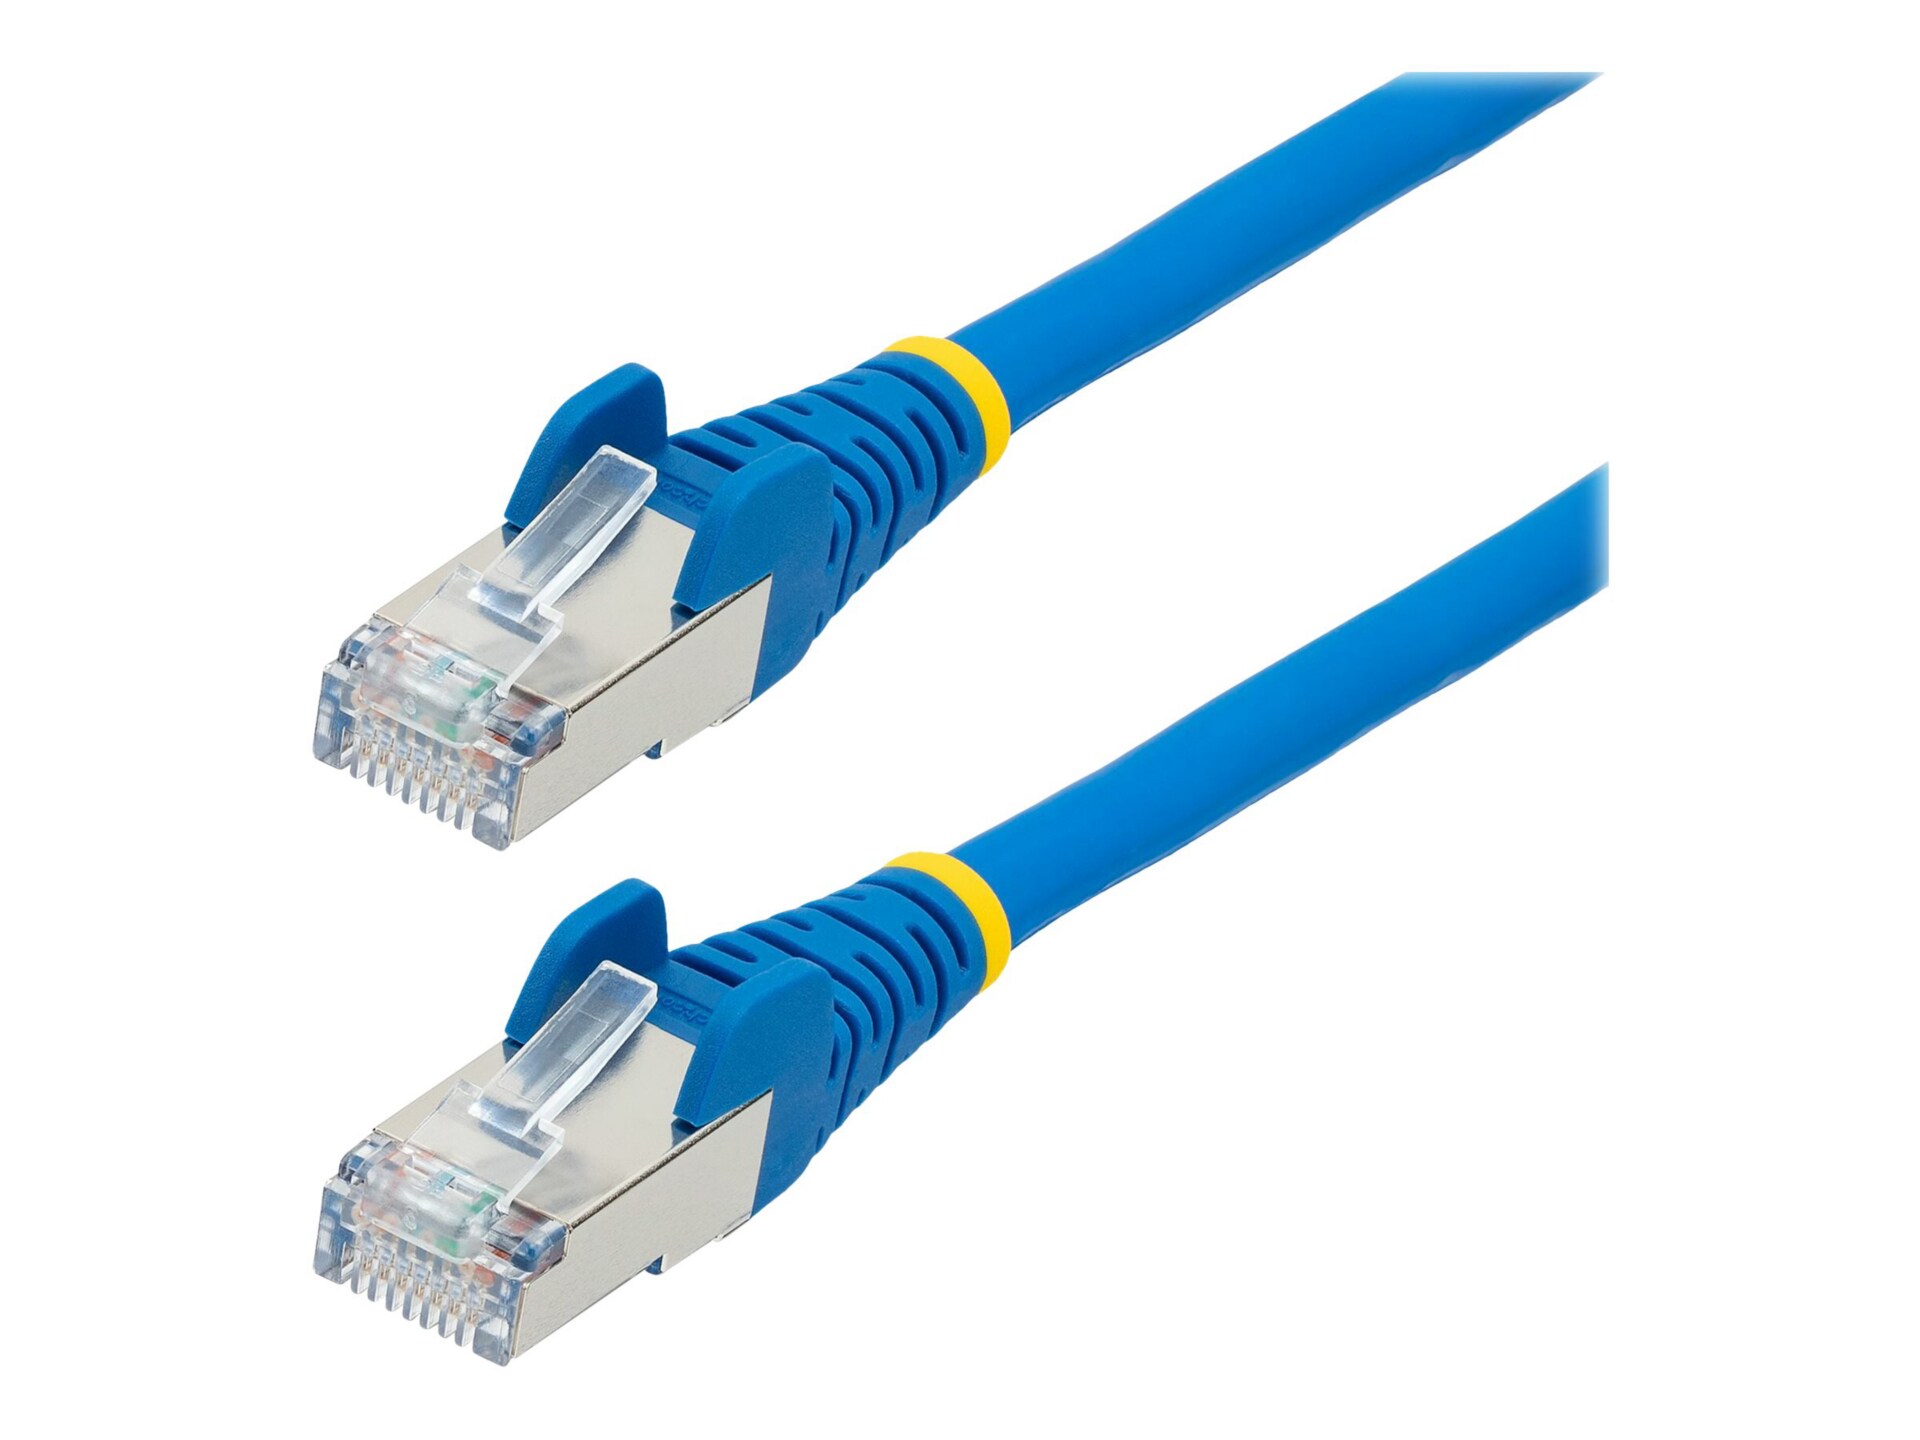 StarTech.com 20ft CAT6a Ethernet Cable, Blue Low Smoke Zero Halogen (LSZH) 10 GbE 100W PoE S/FTP Snagless RJ-45 Network